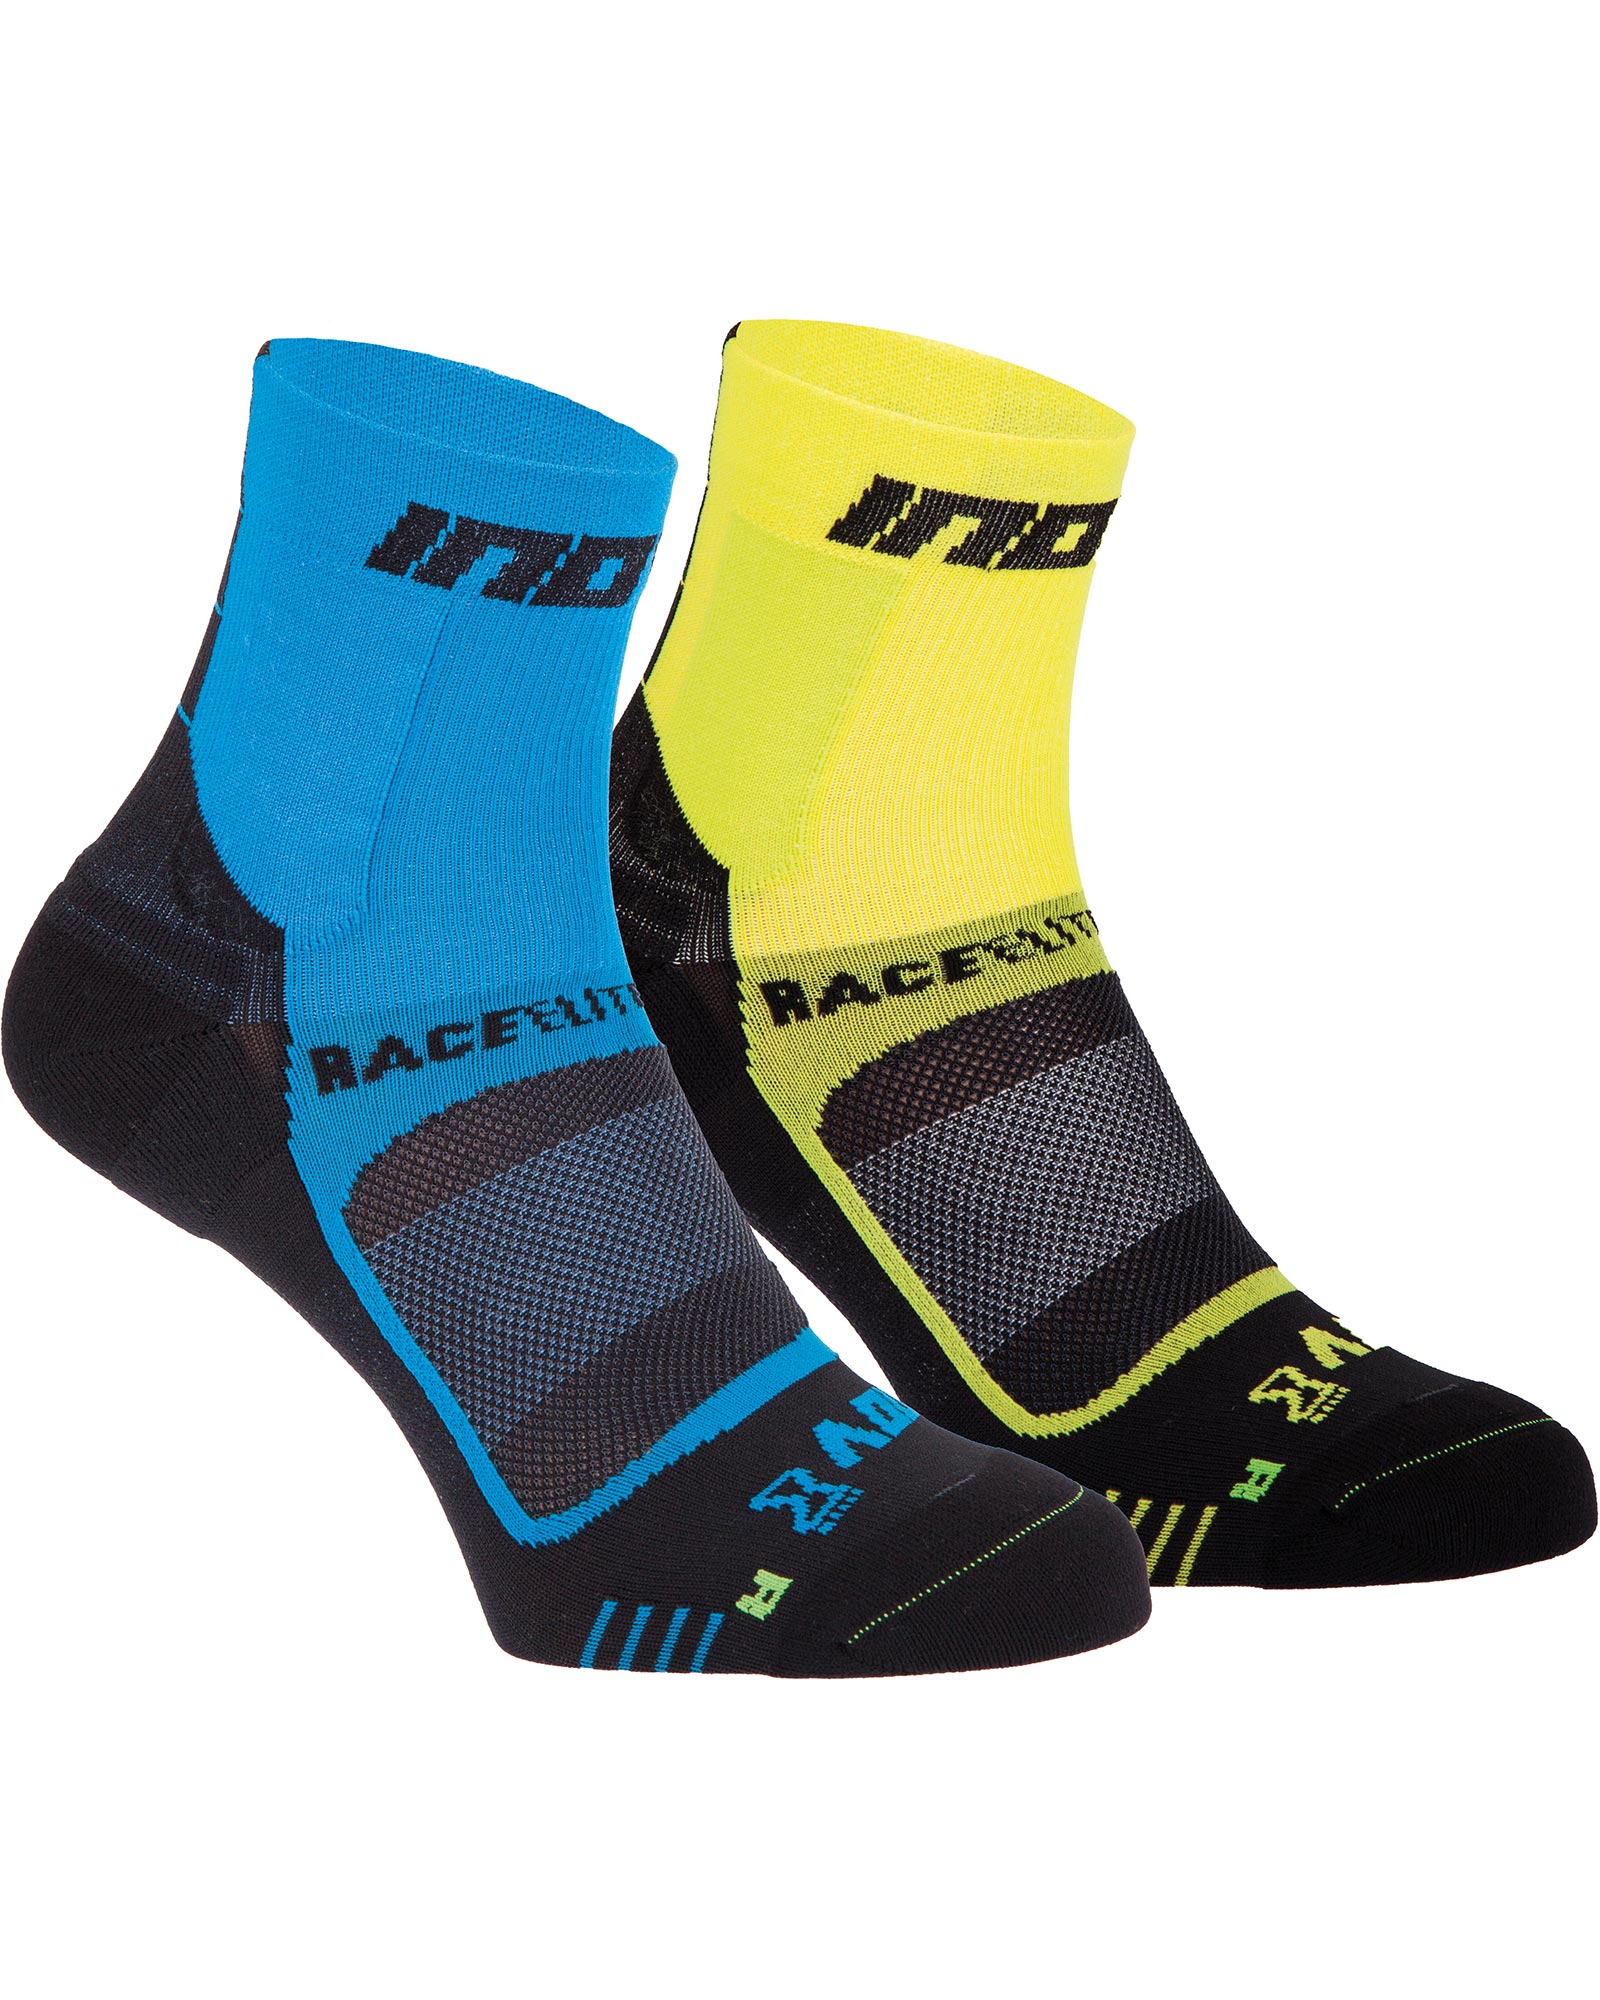 Inov 8 Race Elite Pro Socks (Twin Pack) - Blue/Yellow S